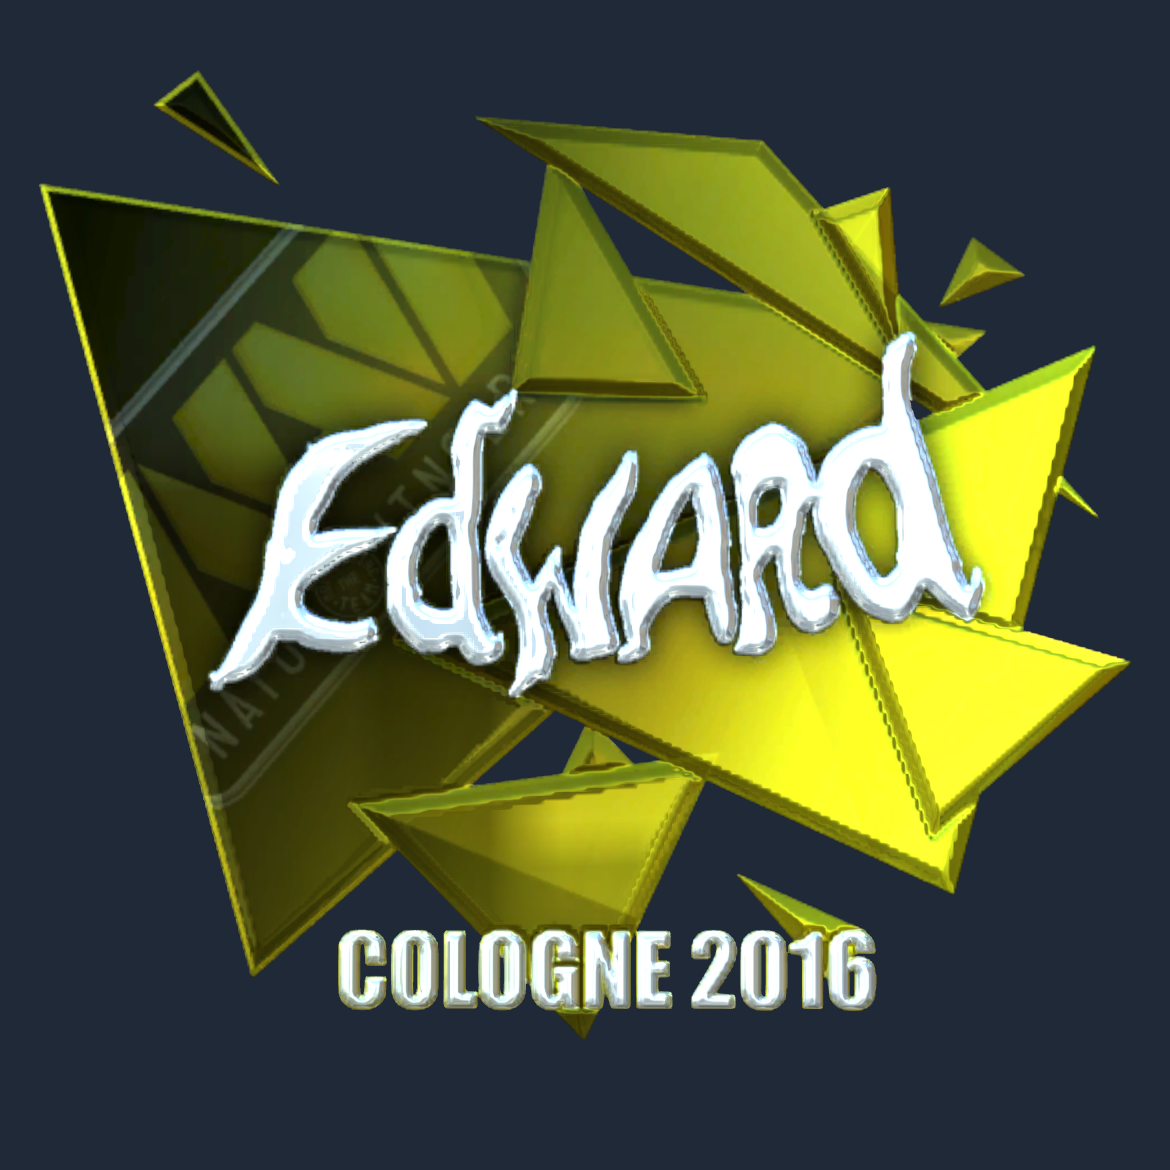 Sticker | Edward (Foil) | Cologne 2016 Screenshot